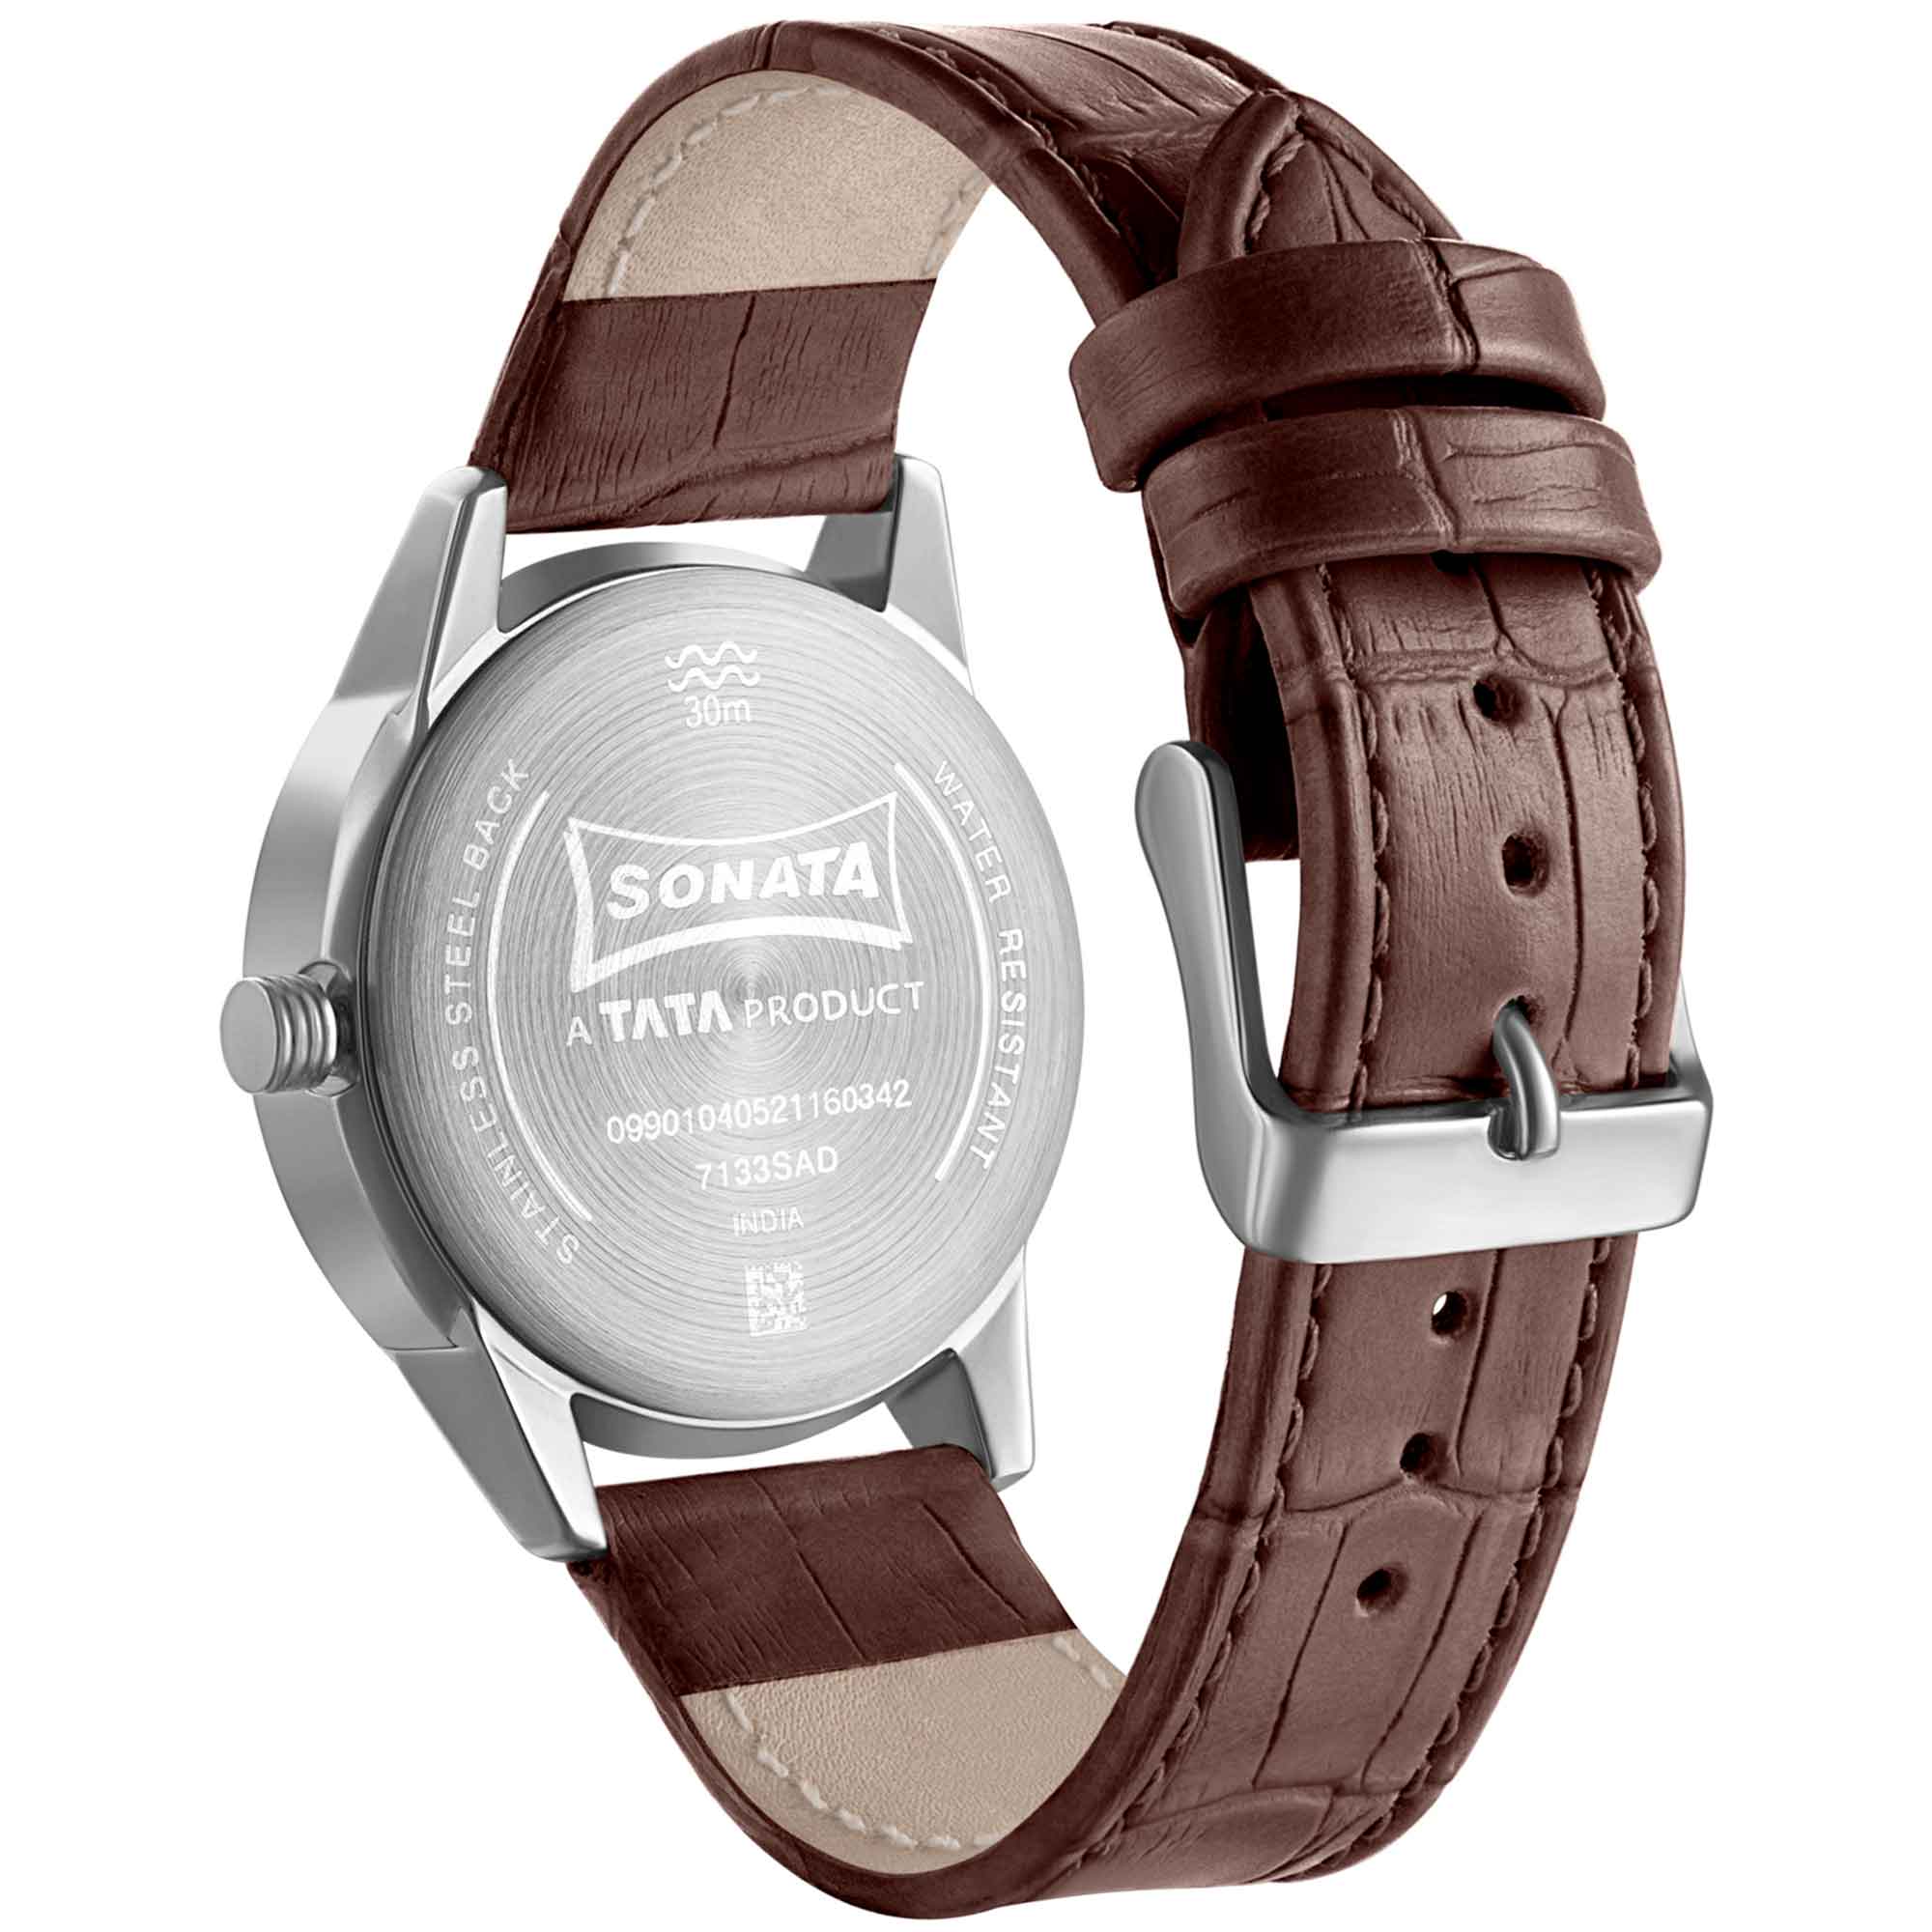 Sonata Quartz Multifunction Silver Dial Leather Strap Watch for Men